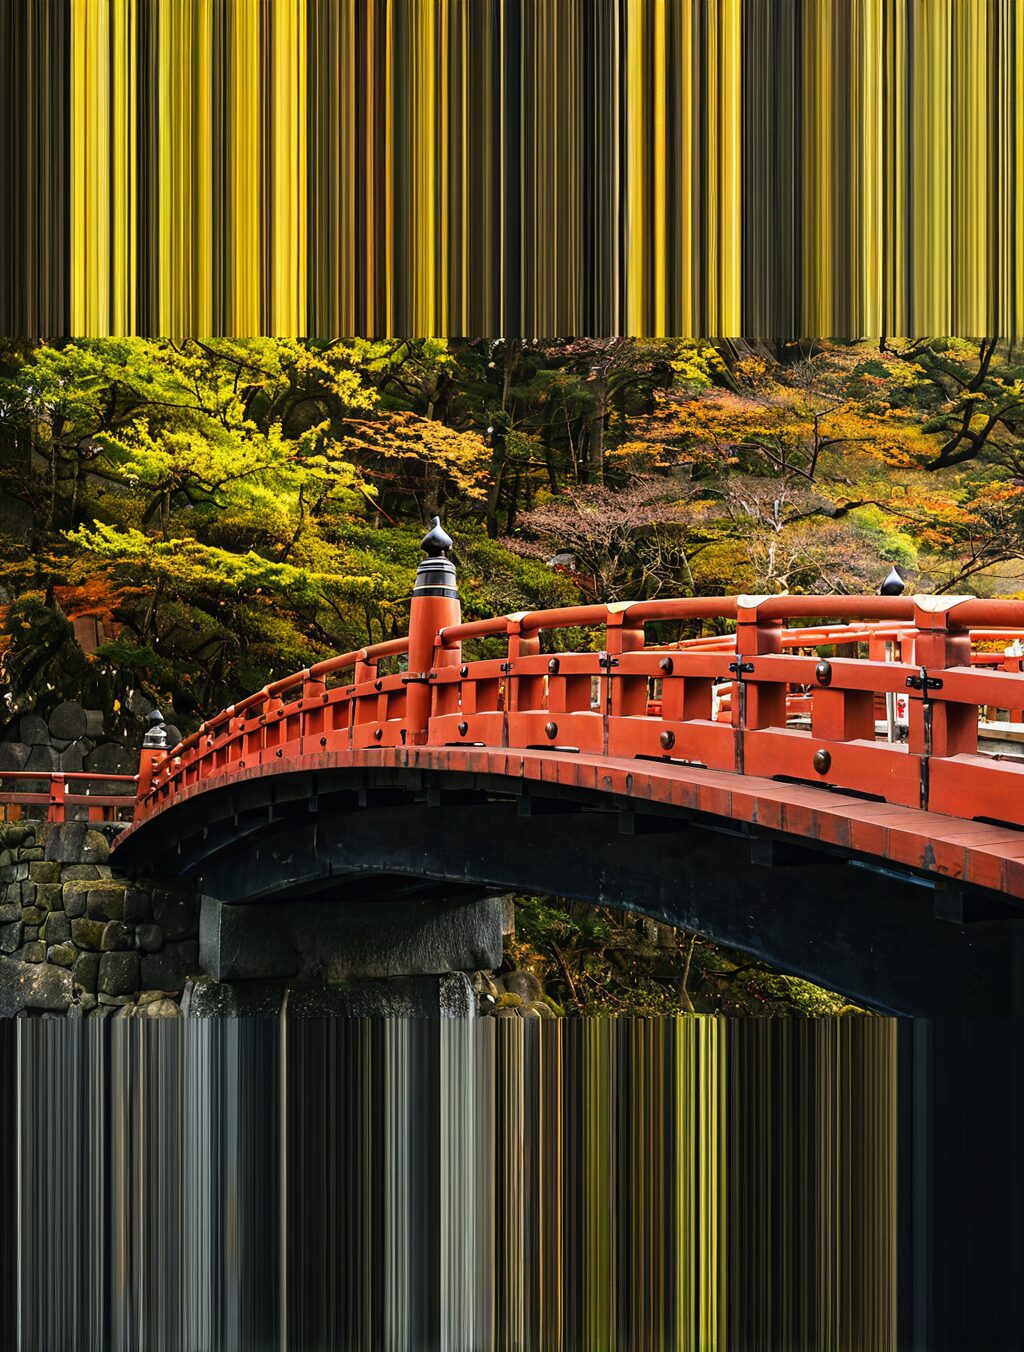 nikko japan day trip from tokyo